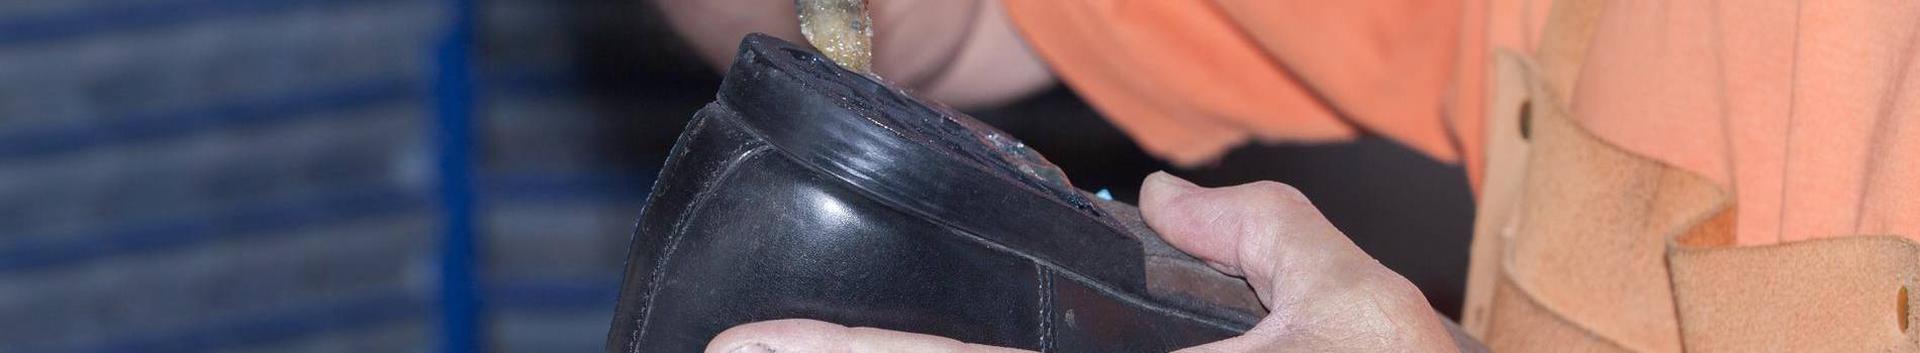 shoe repair, shoemakers, leather and footwear industry